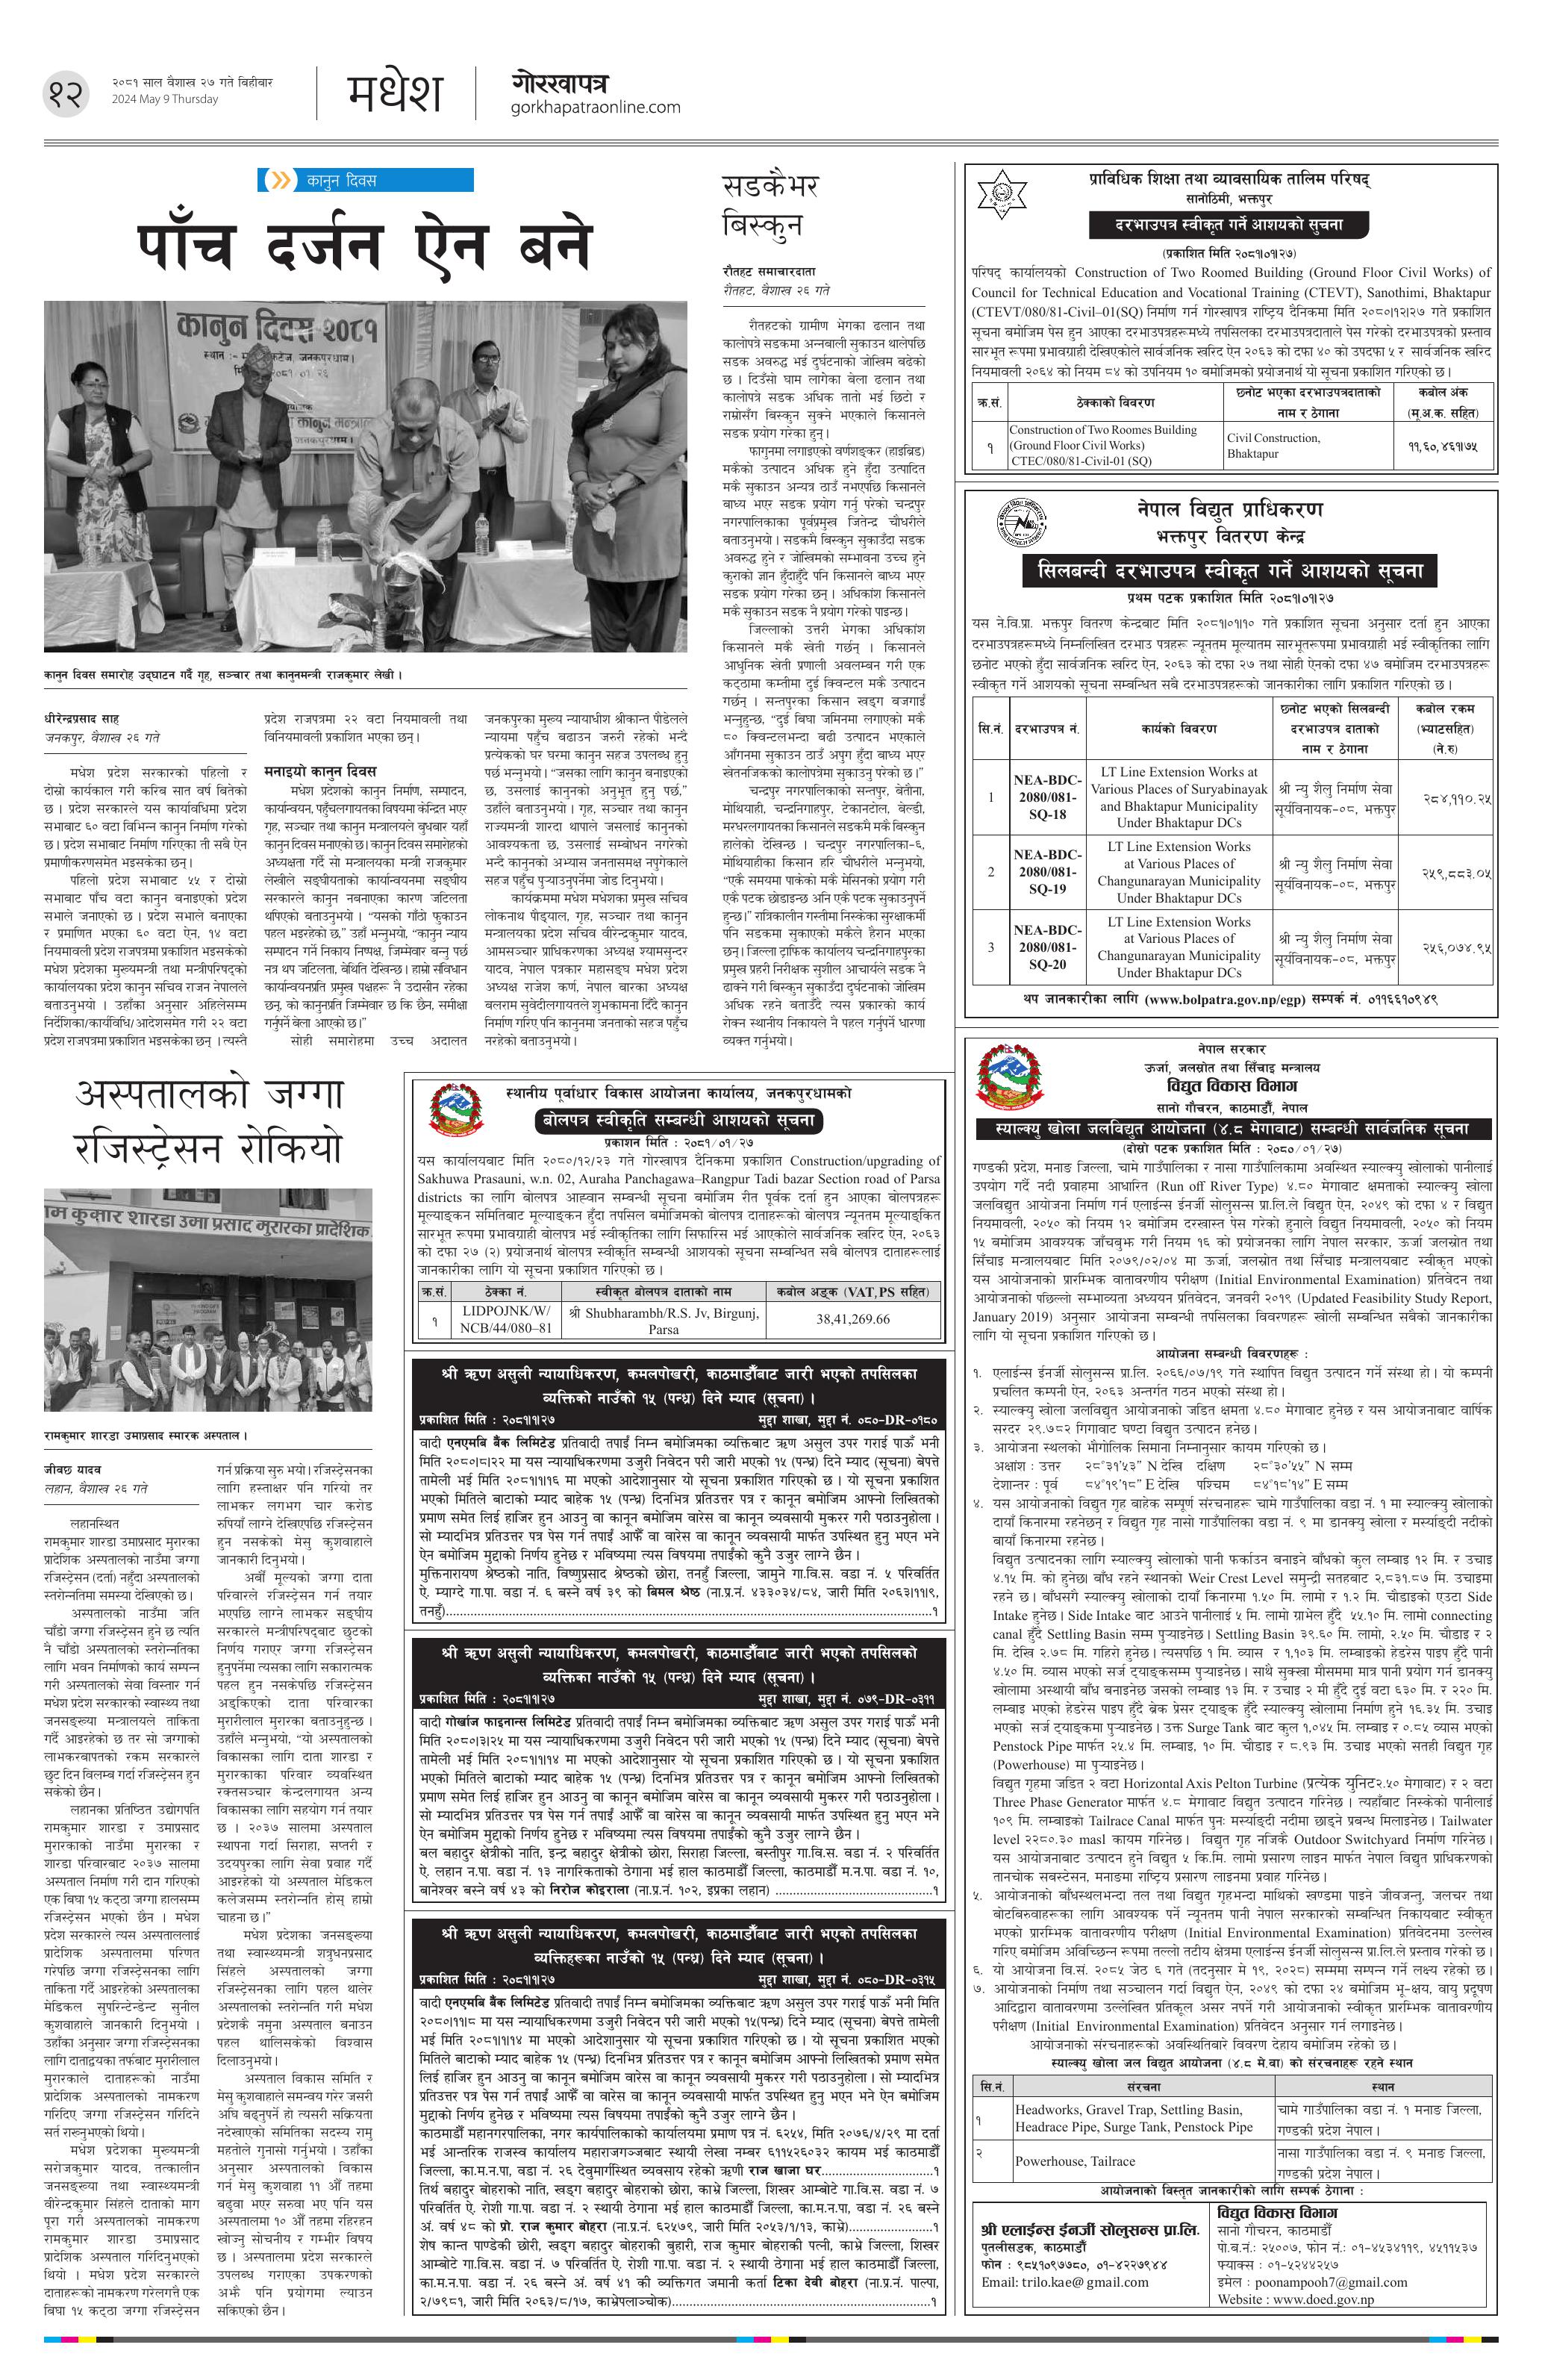 Gorkhapatra Online Newspaper Gorkhapatra Online Page 12 Epaper Hub